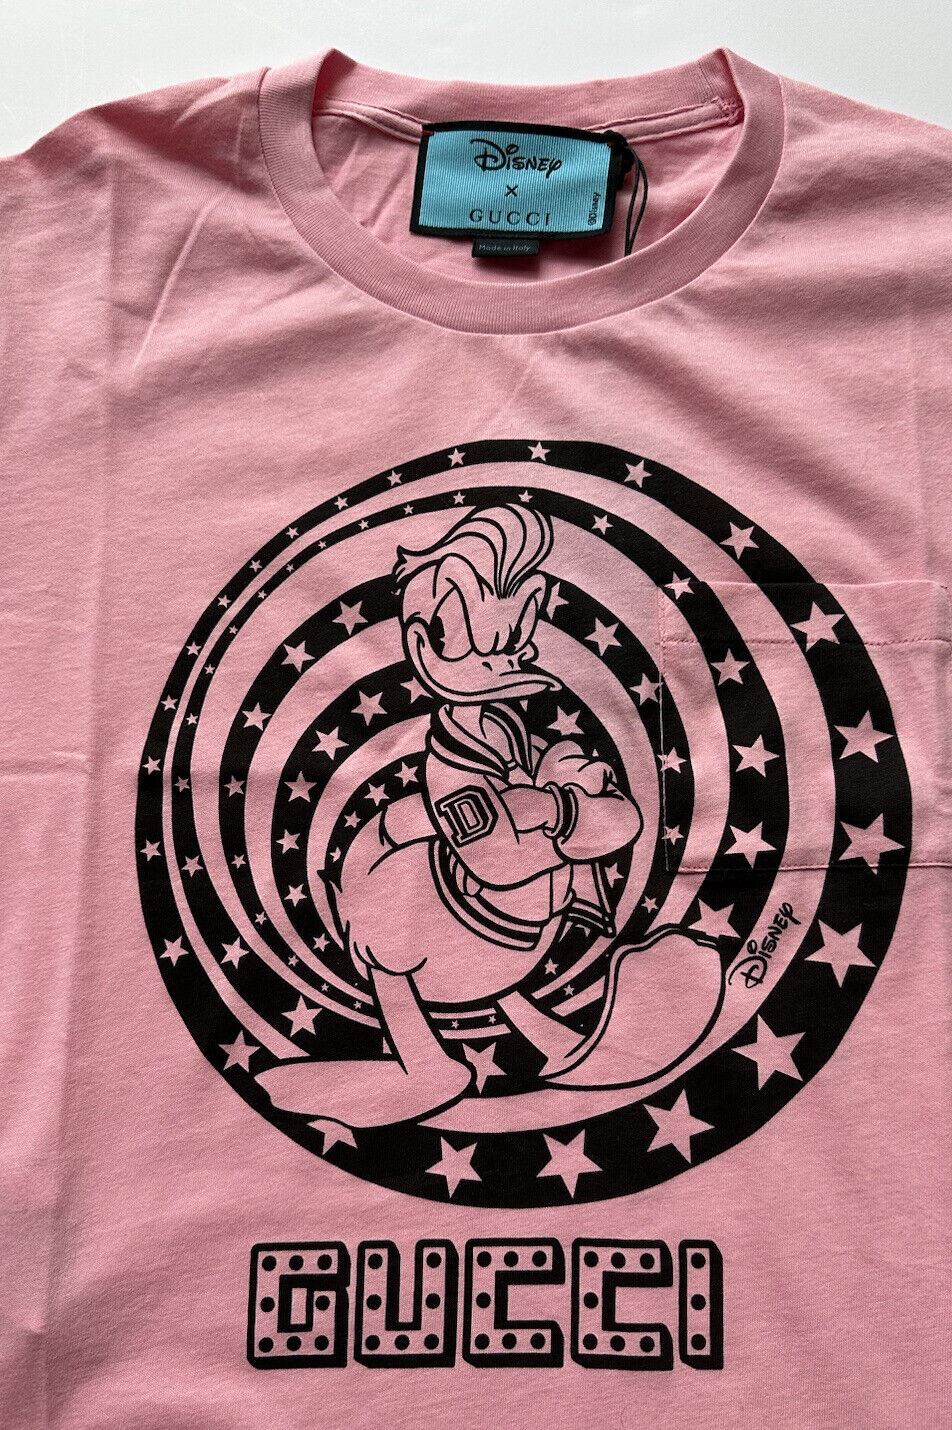 NWT Gucci Donald Duck Jersey Розовая футболка, маленькая 644674 Сделано в Италии